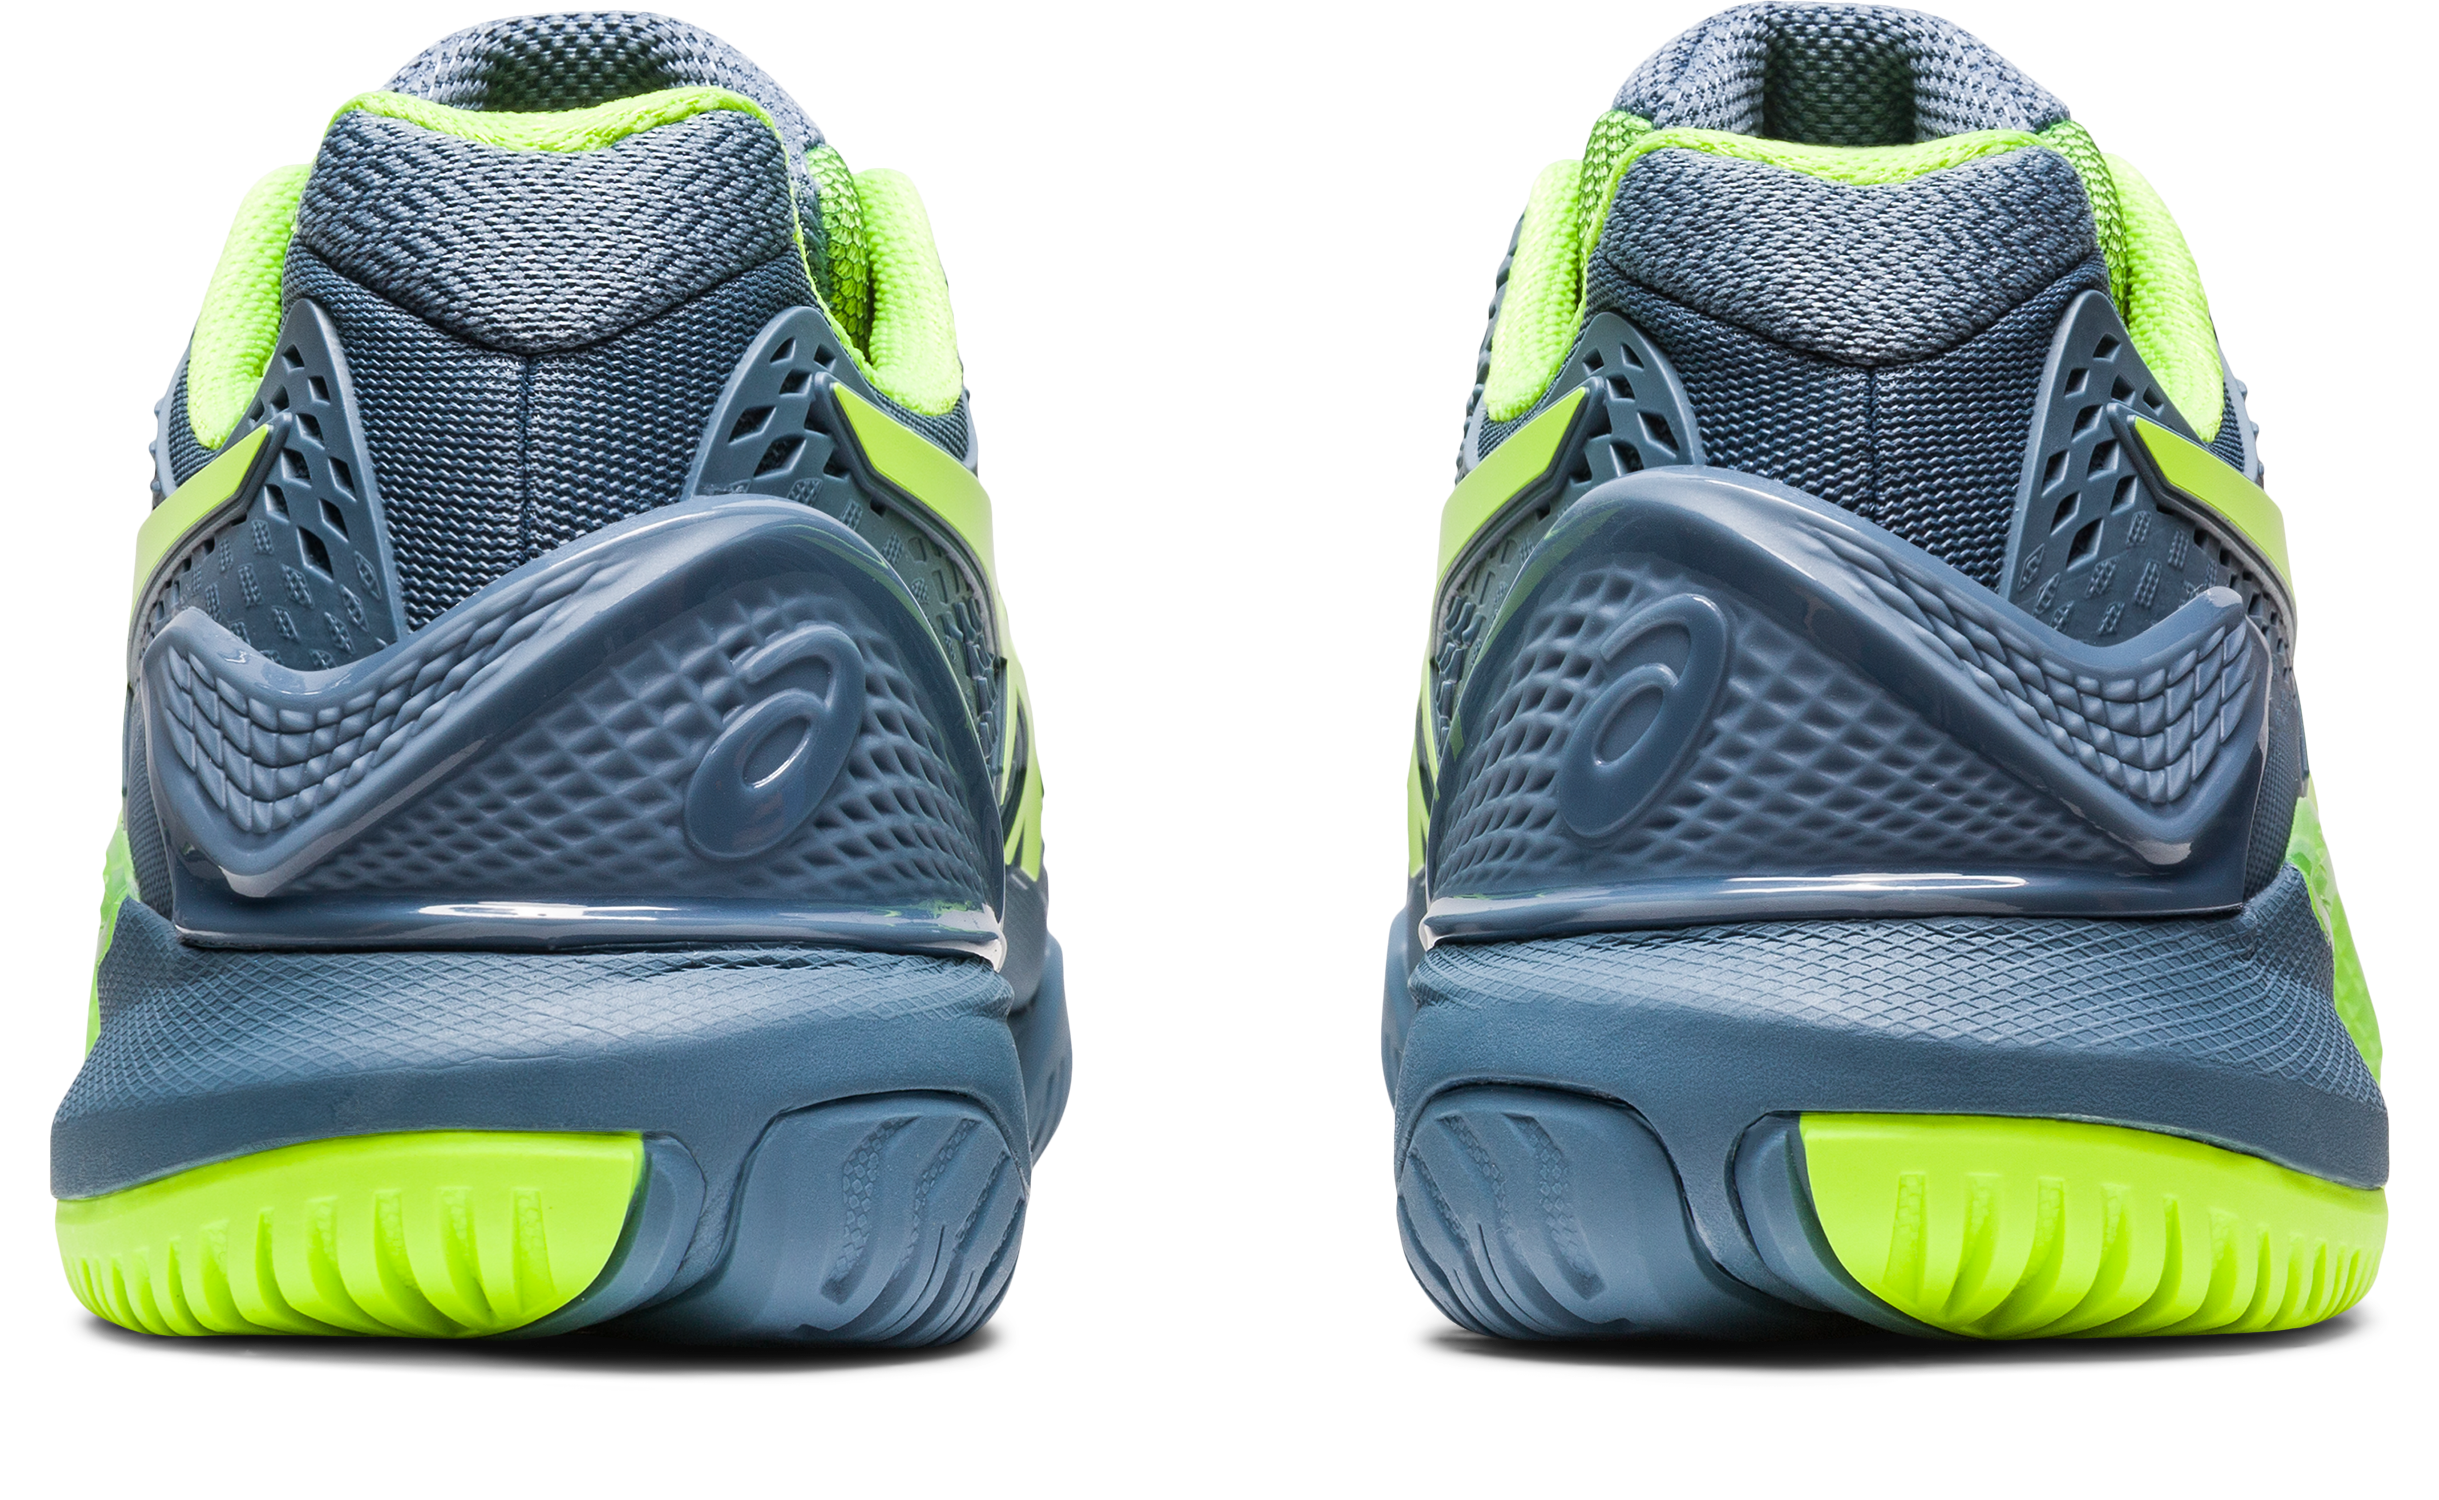 Asics Men's Gel-Resolution 9 Tennis Shoes In Steel Blue/Hazard Green